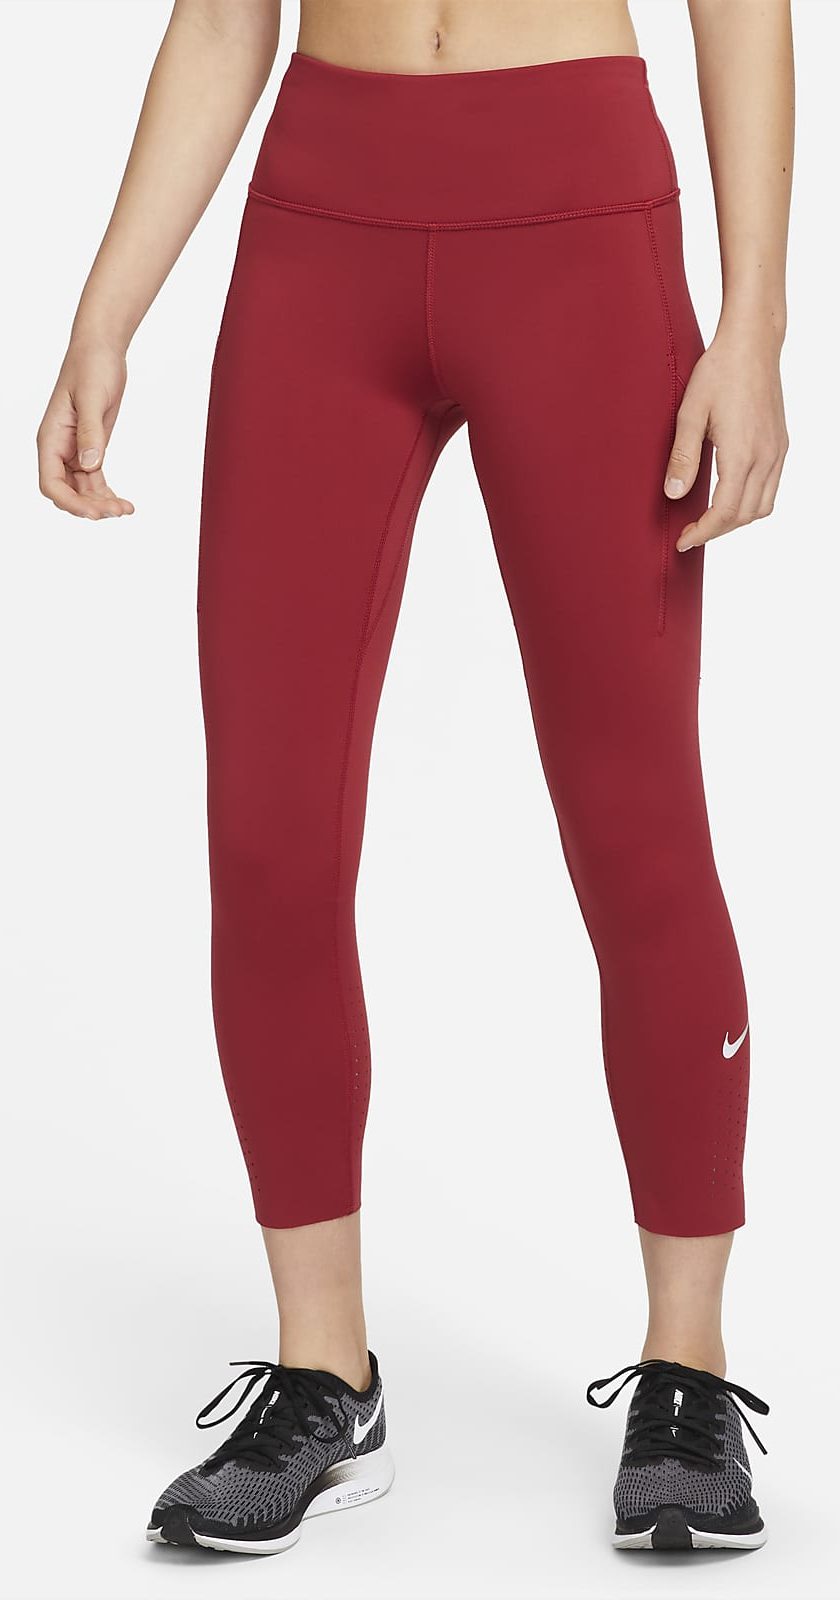 Nike Power Epic Lux Crop Mesh Tights - Women's Plus Sizes, REI Co-op